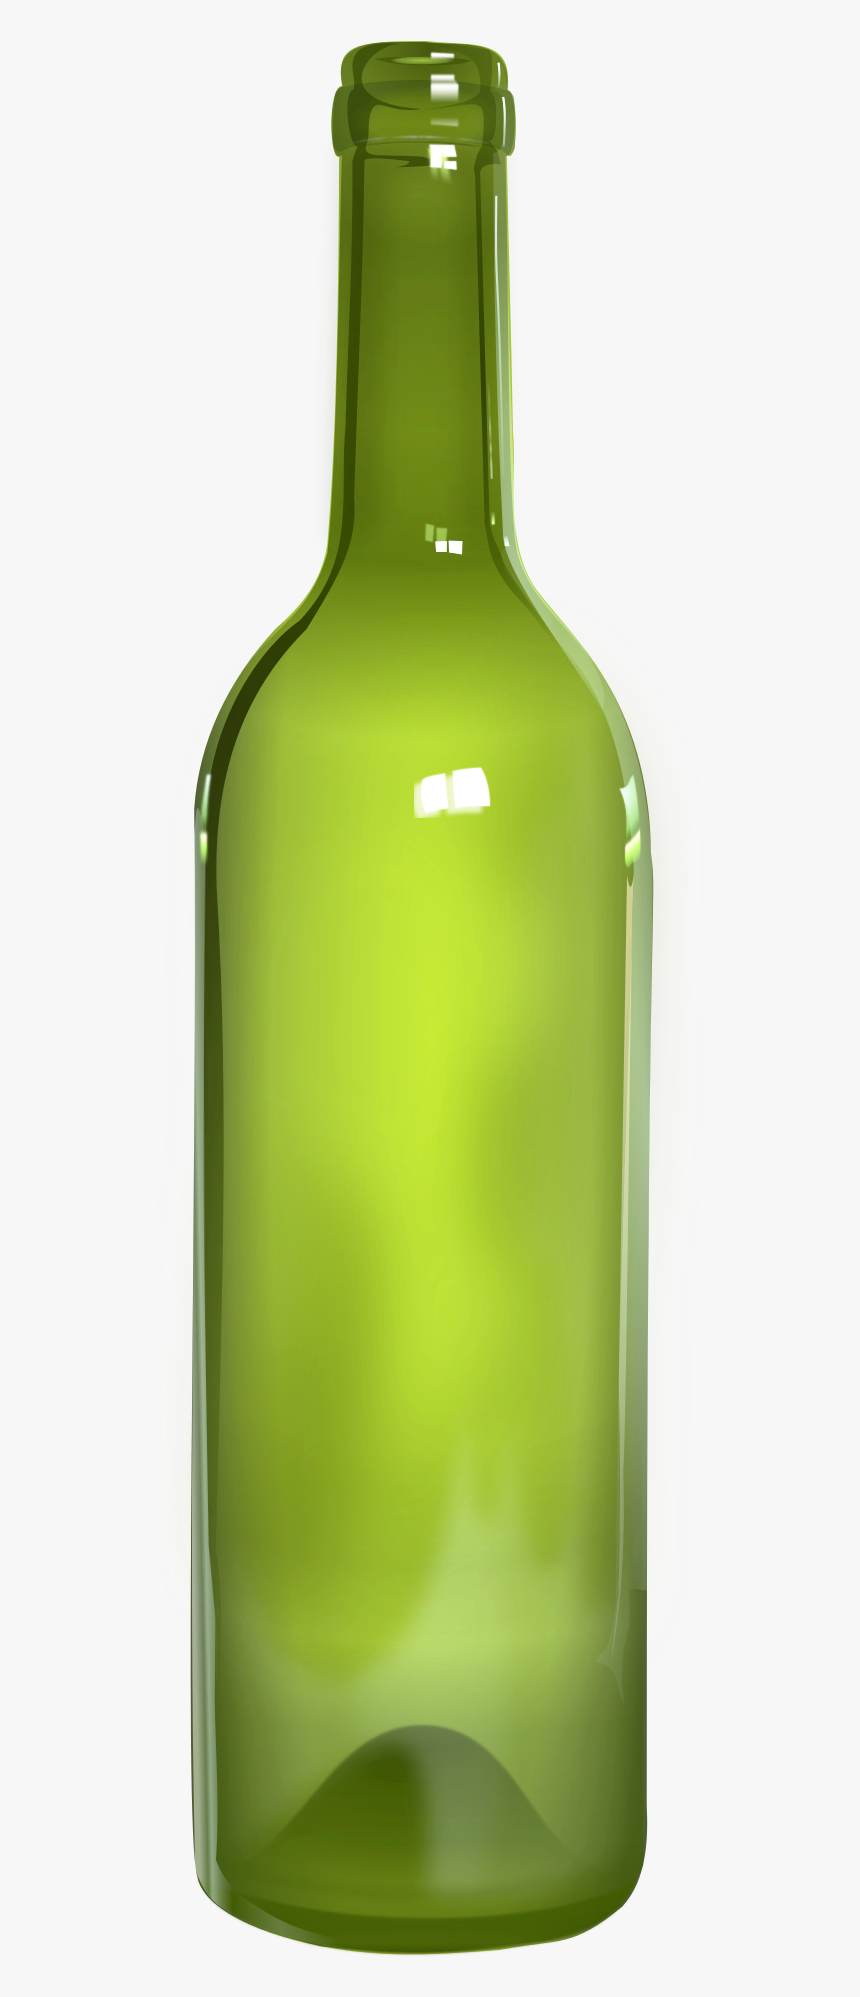 Glass Bottle Png - Transparent Background Bottle Glass Png, Png Download, Free Download